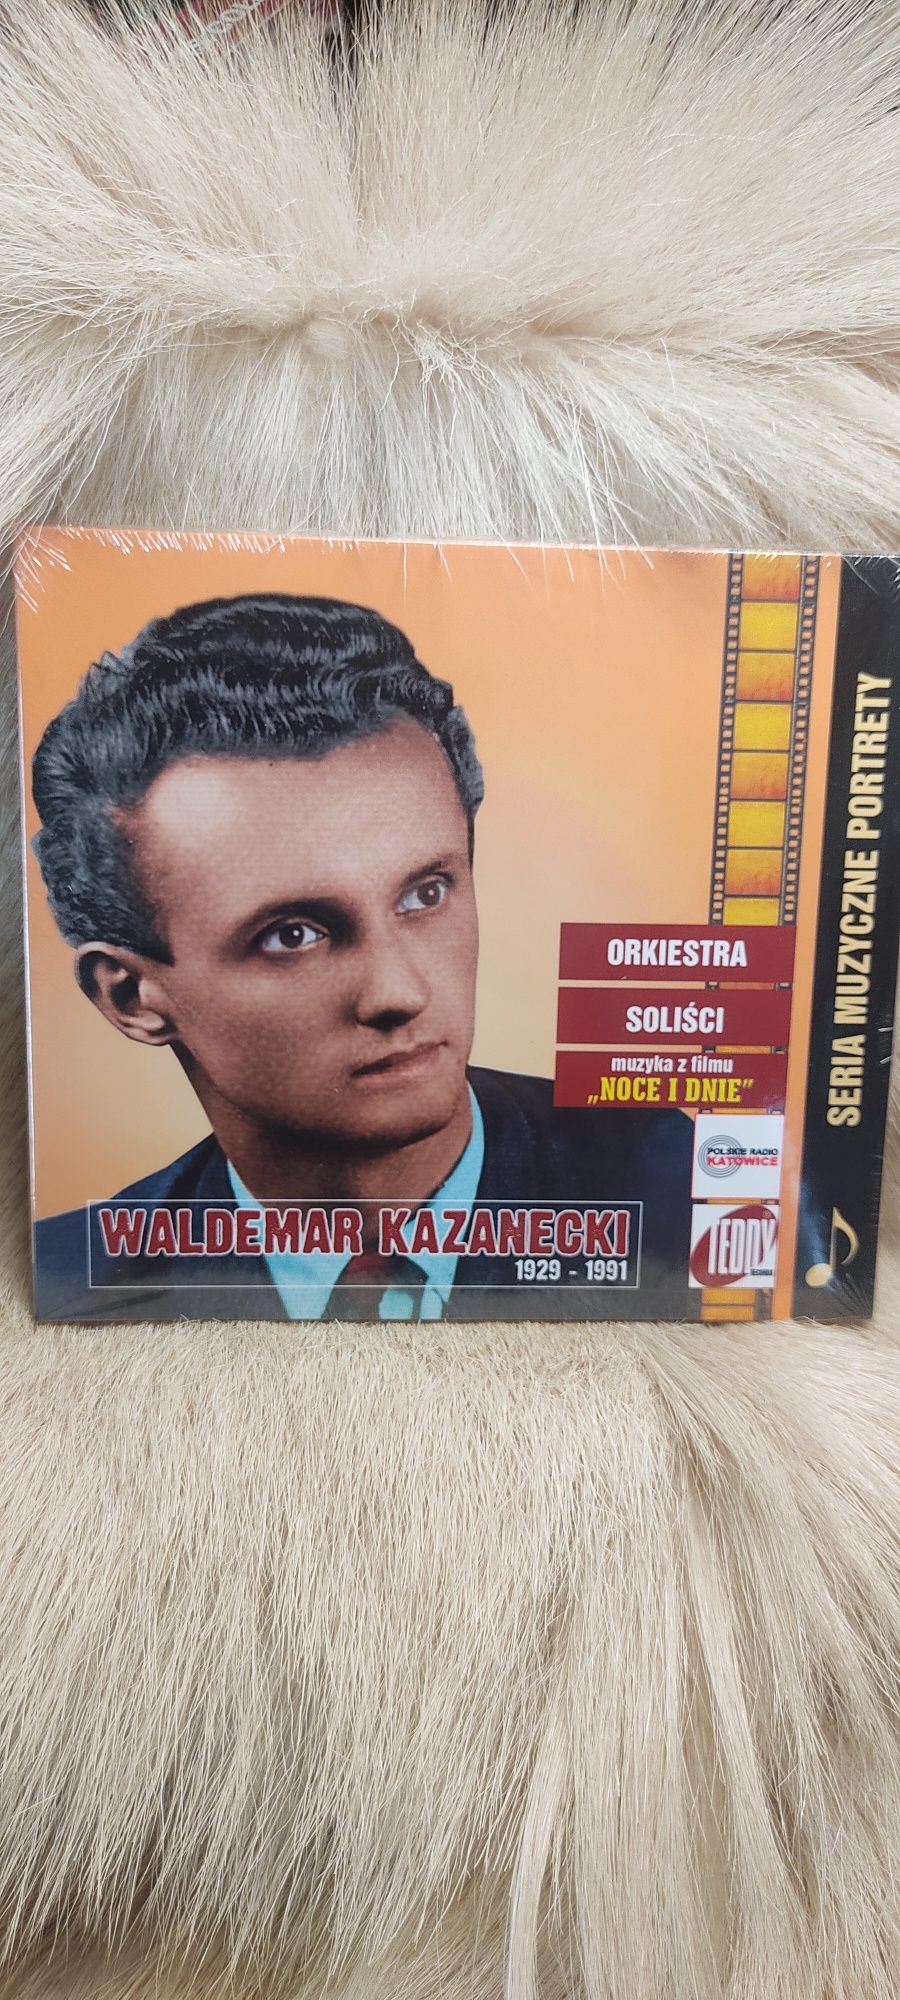 Płyta CD Waldemar Kazanecki